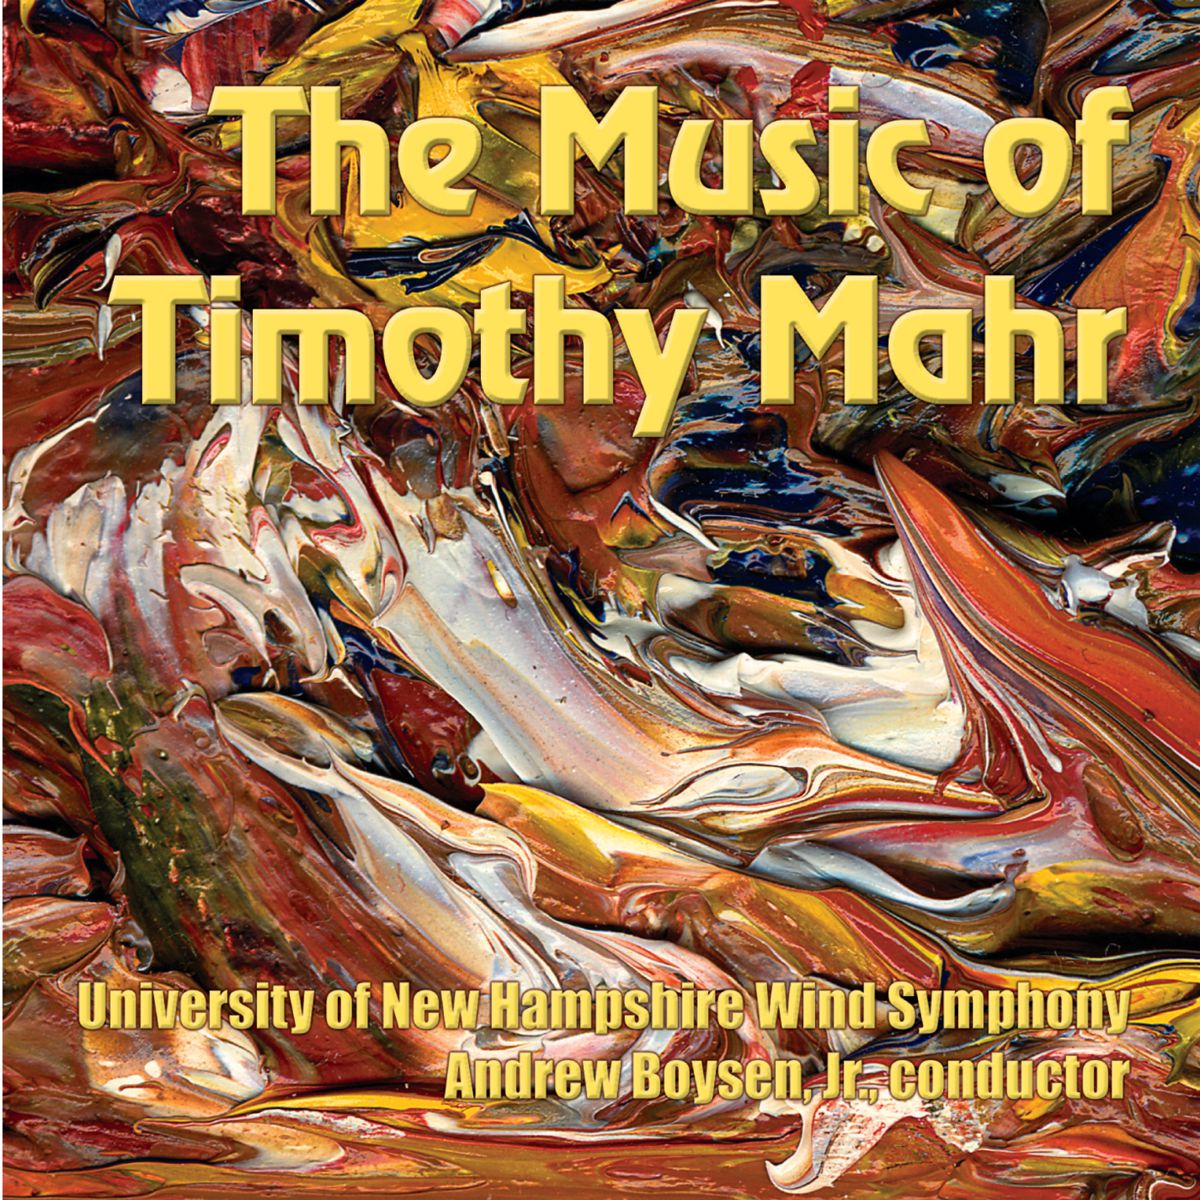 Music of Timothy Mahr, The - klik hier